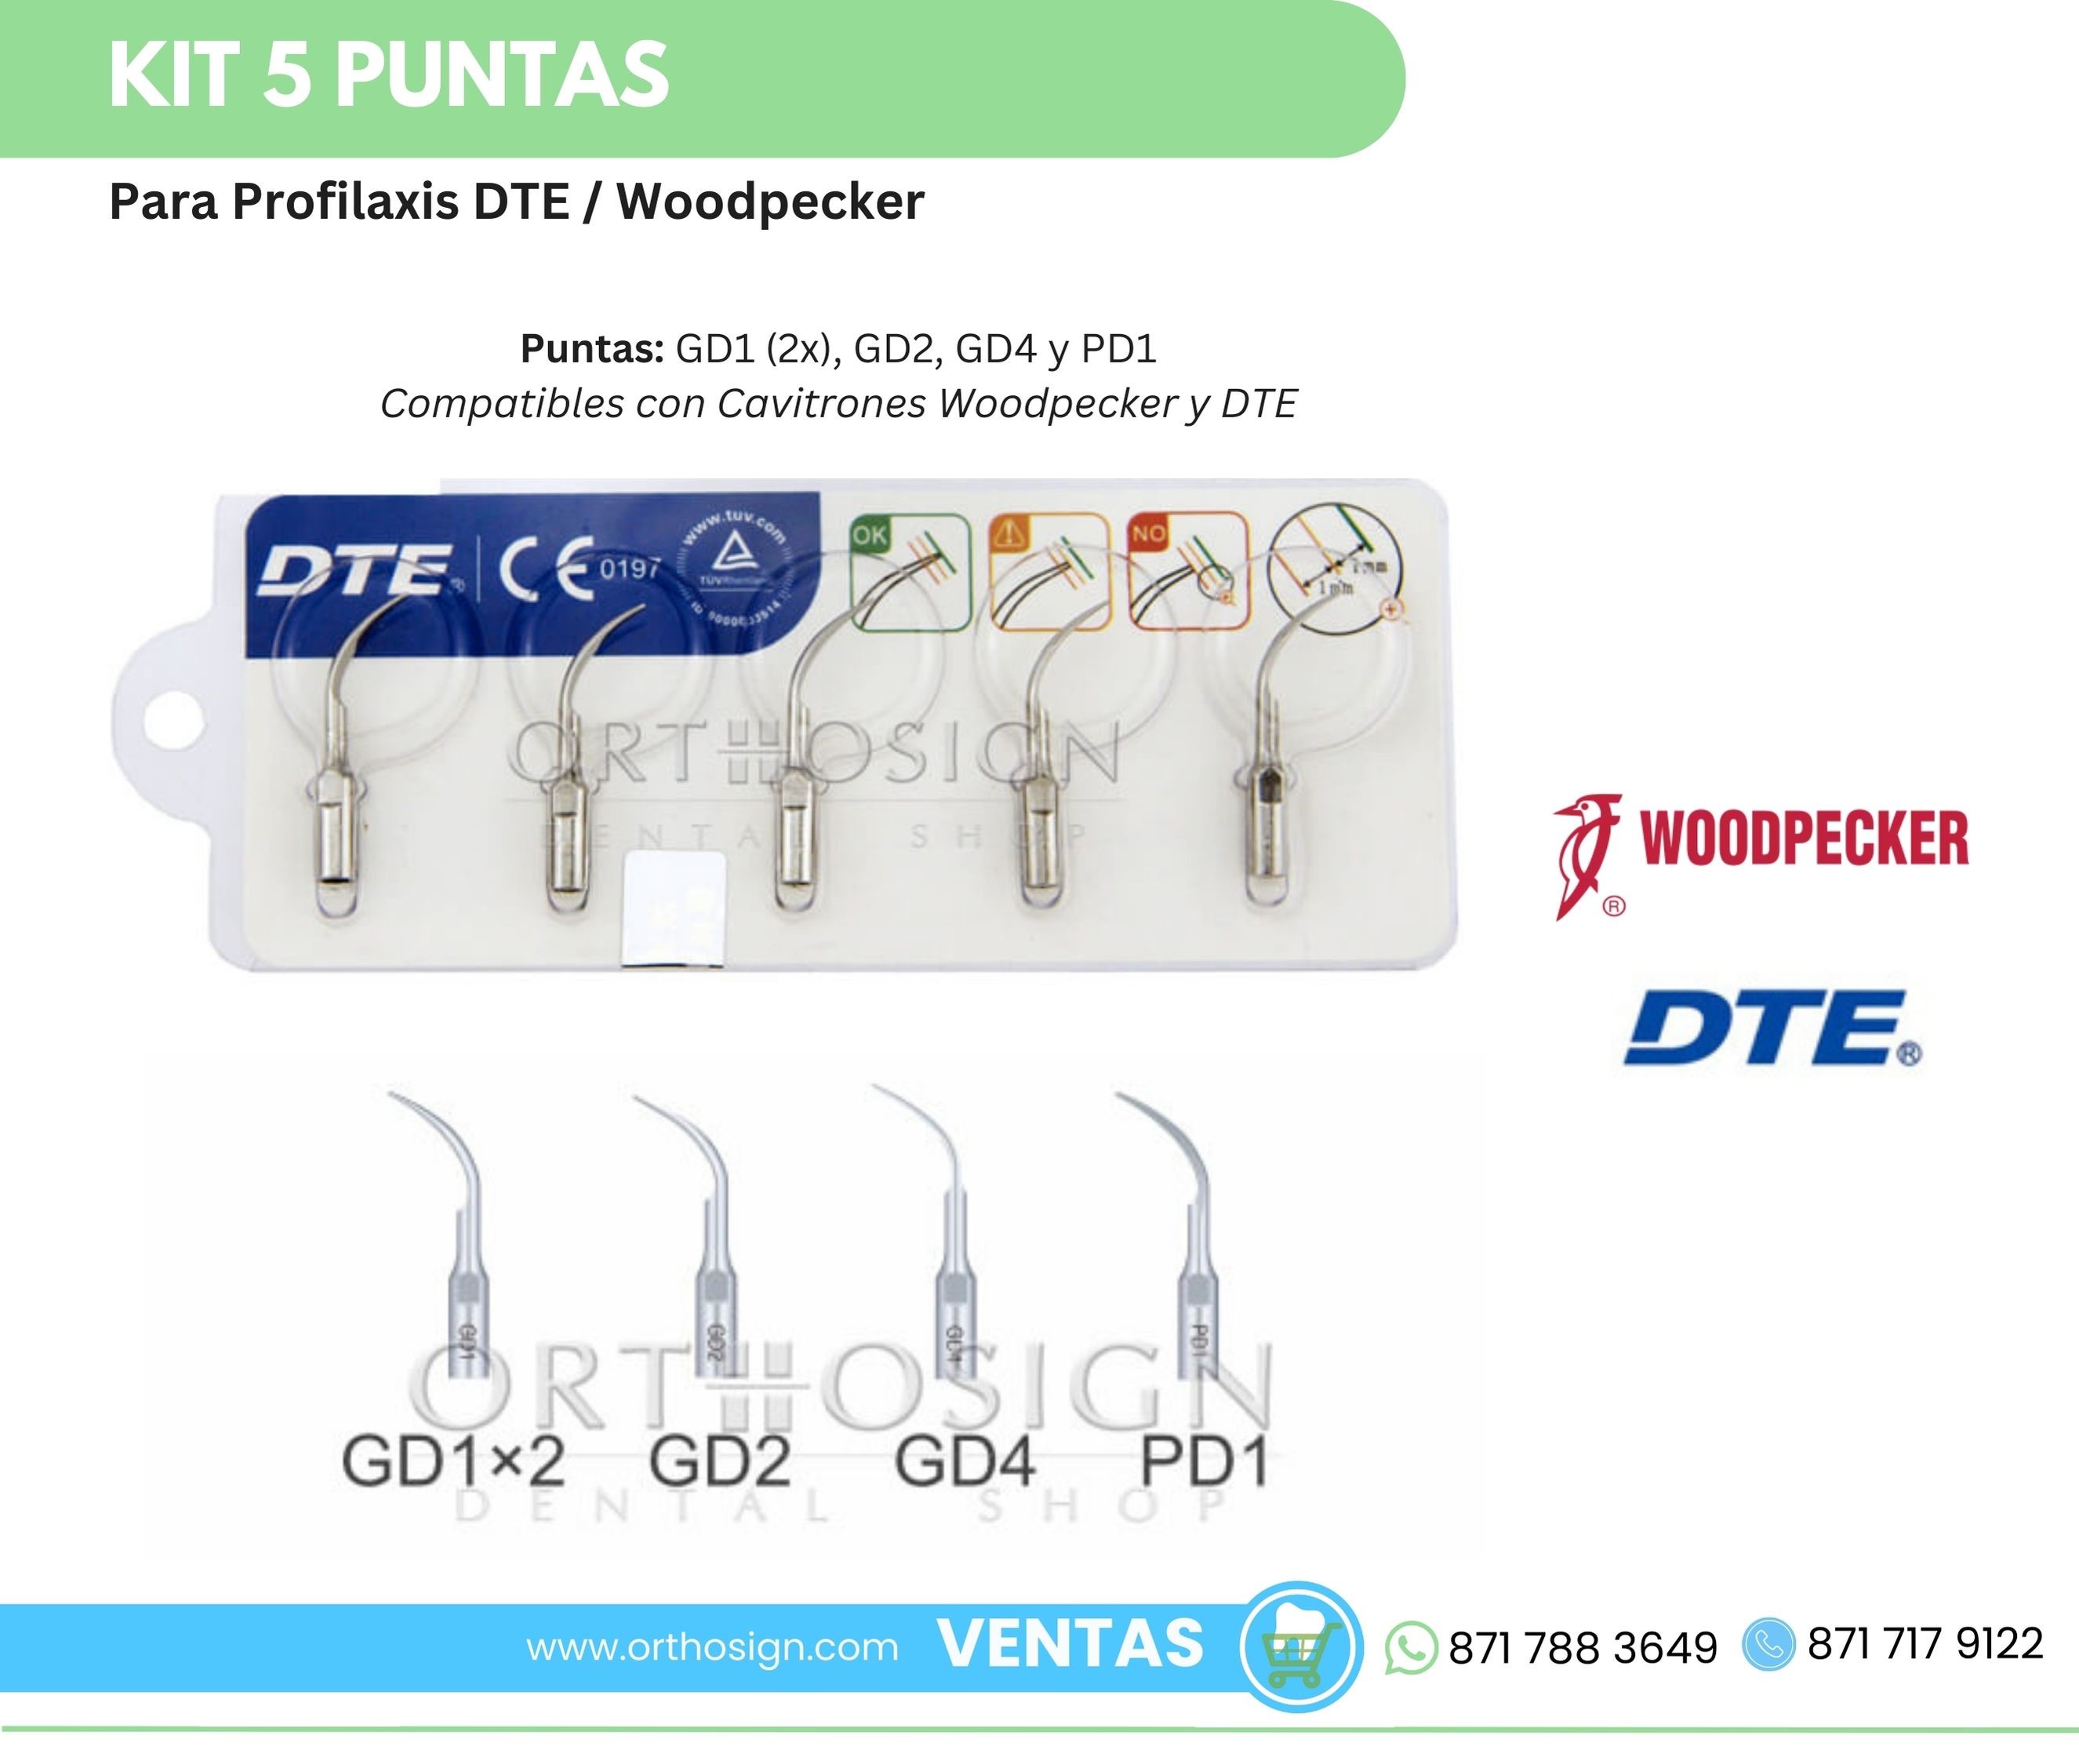 Kit de 5 puntas para Profilaxis DTE / Woodpecker Orthosign